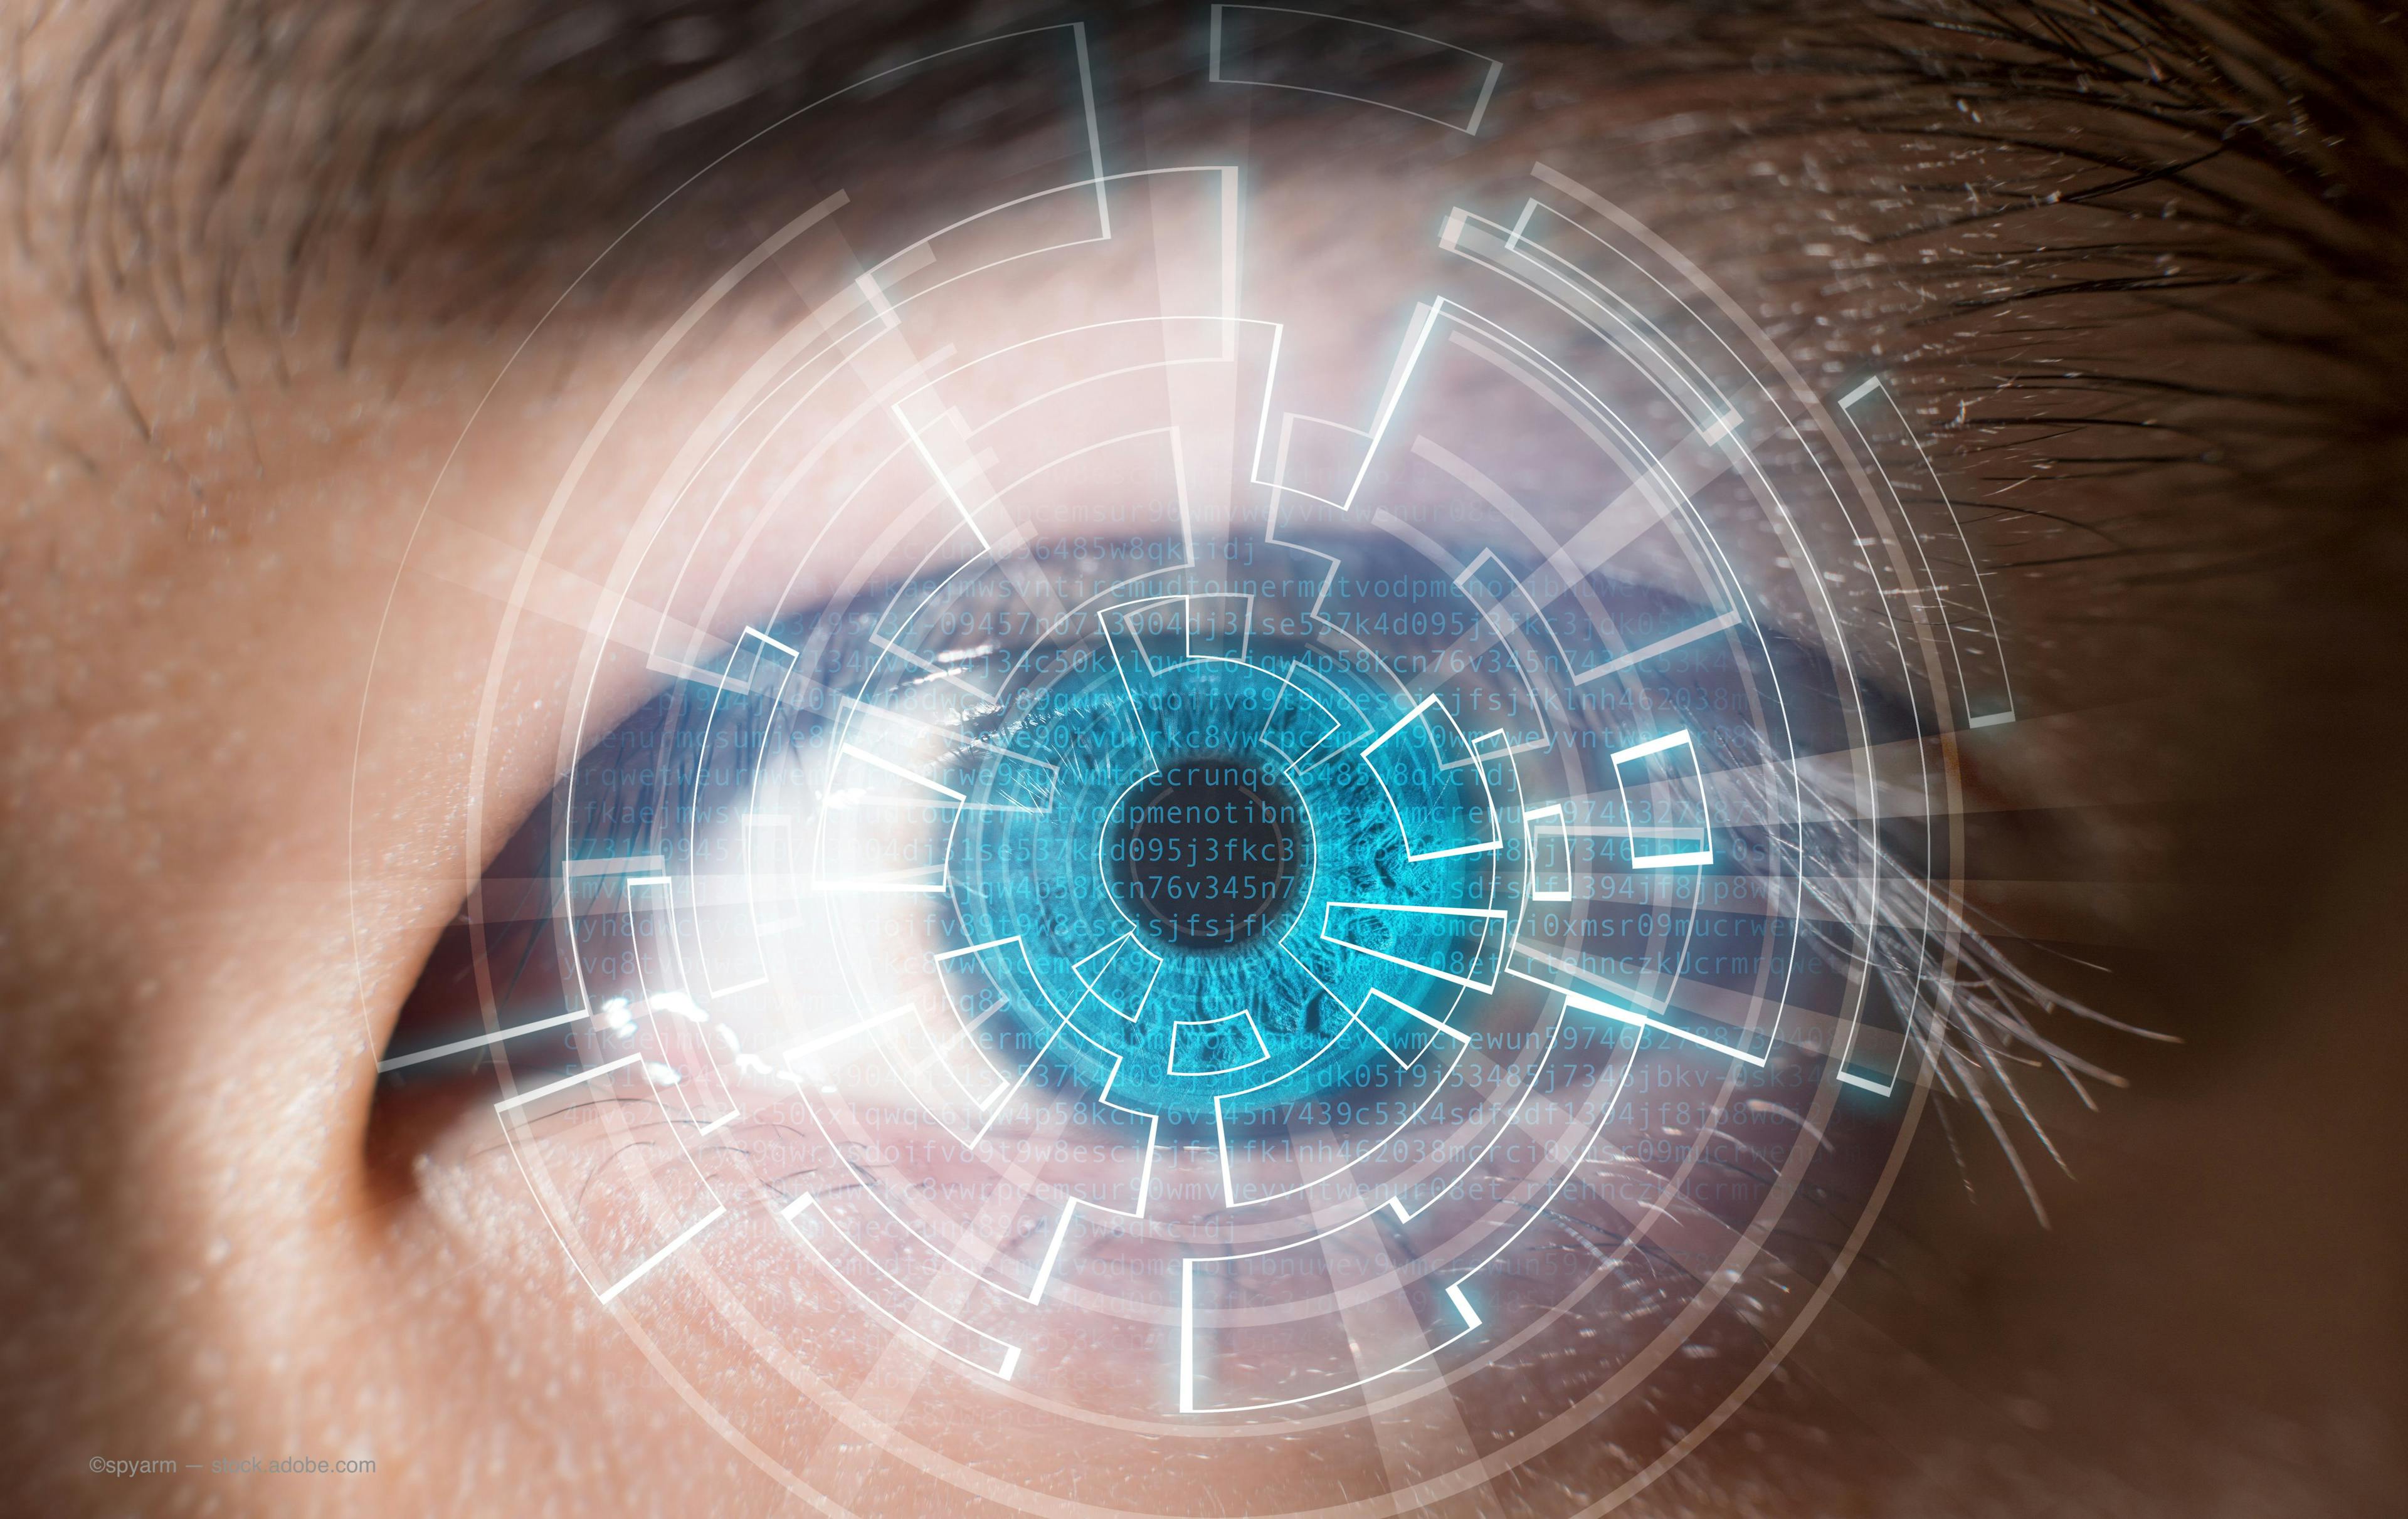 EURETINA 2021 offers virtual education for retina specialists